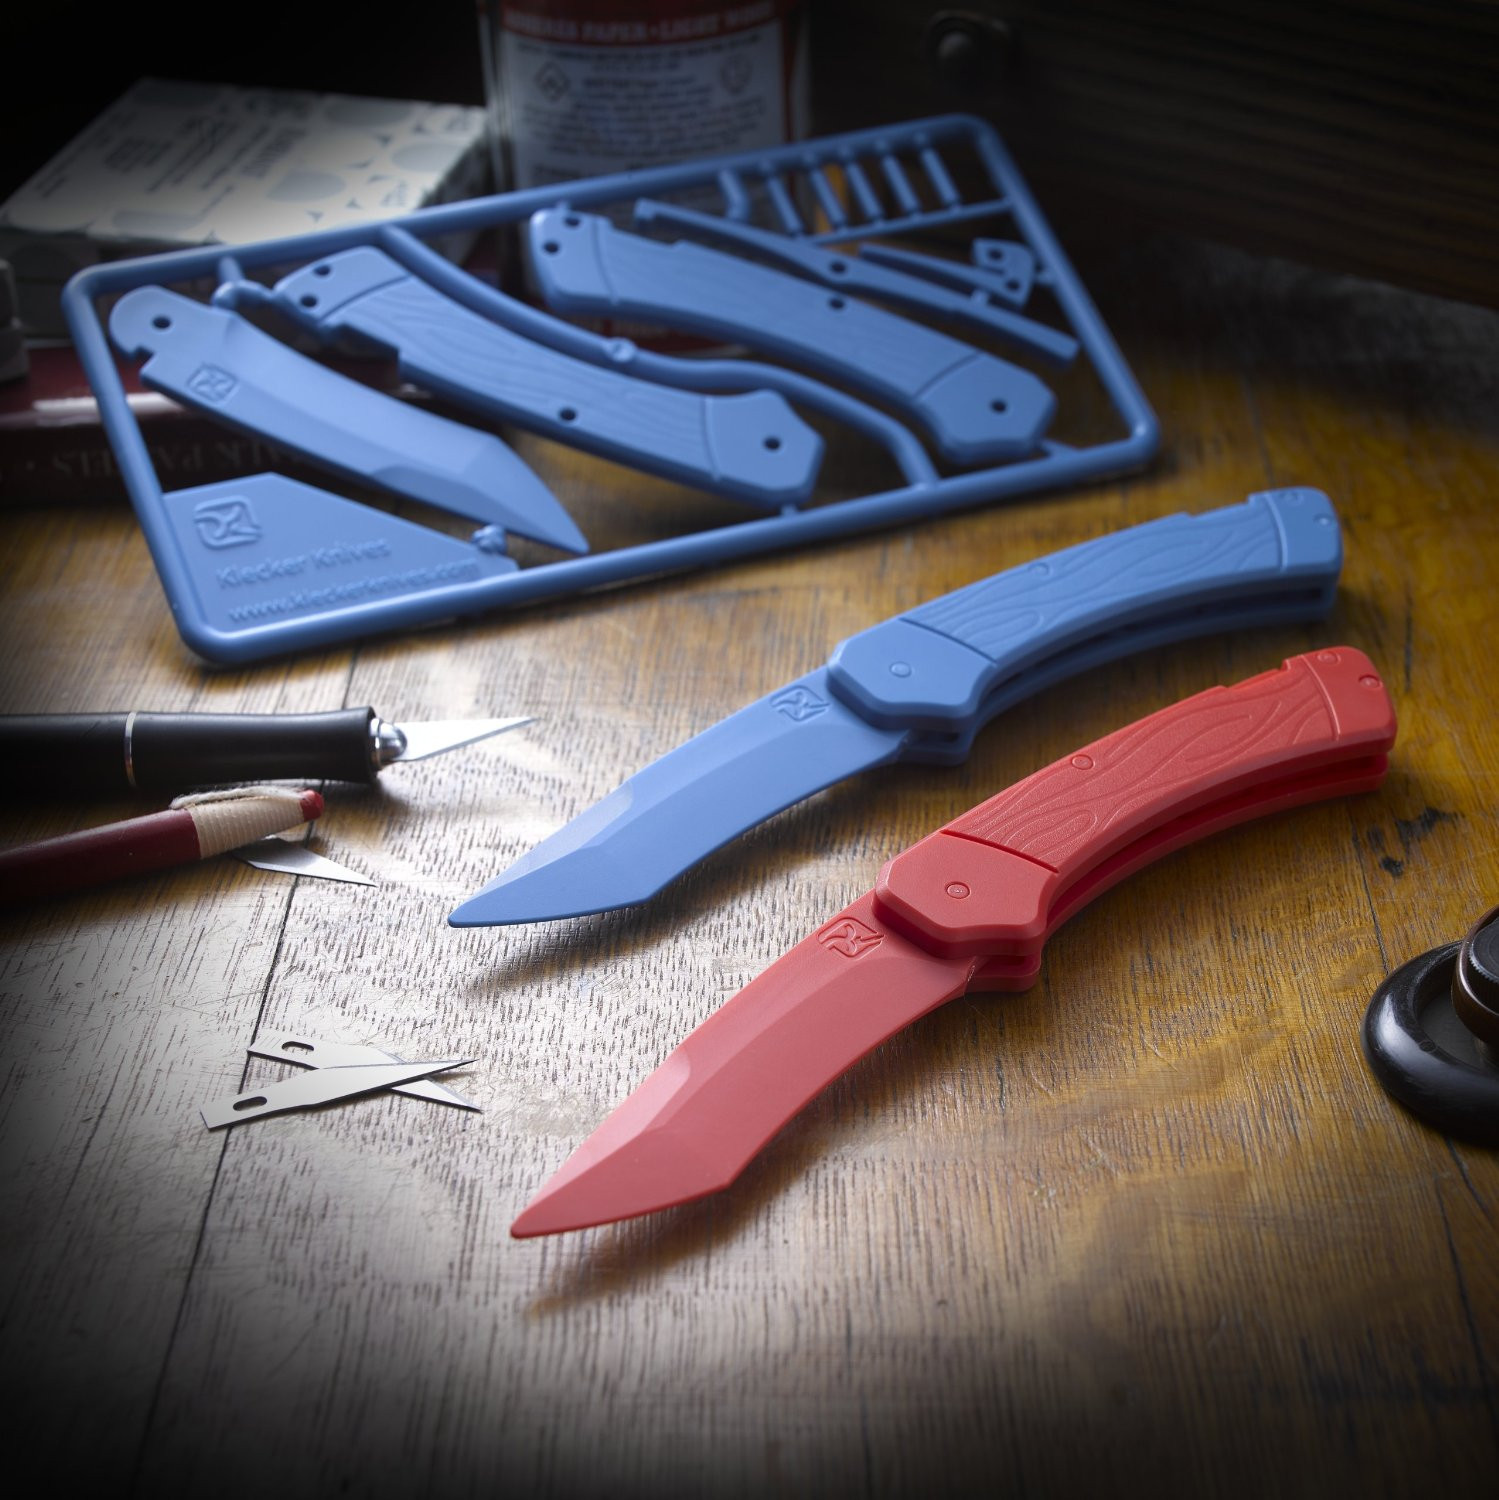 Best ideas about DIY Knife Kits
. Save or Pin DIY Trigger Knife Kit NoveltyStreet Now.